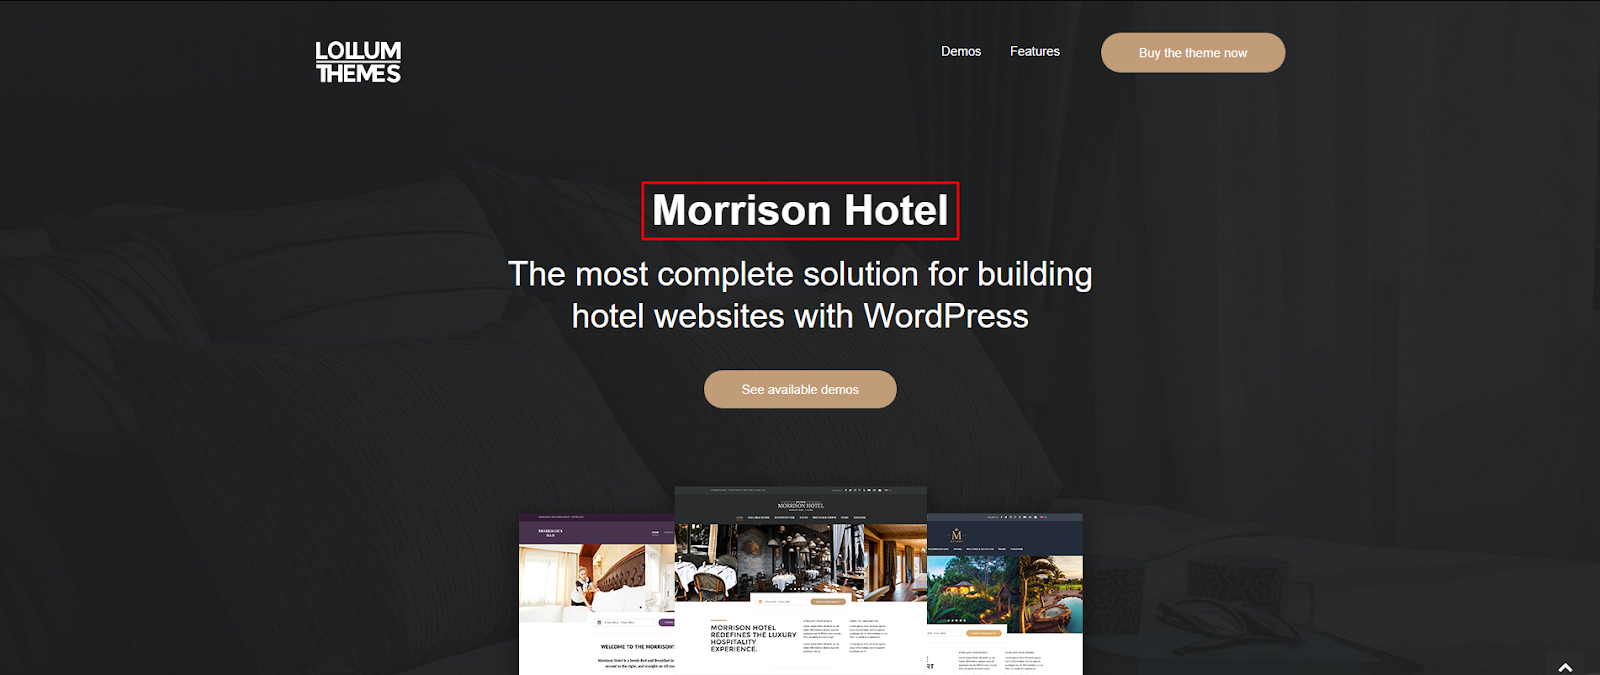 Morrison Hotel - Booking WordPress Theme